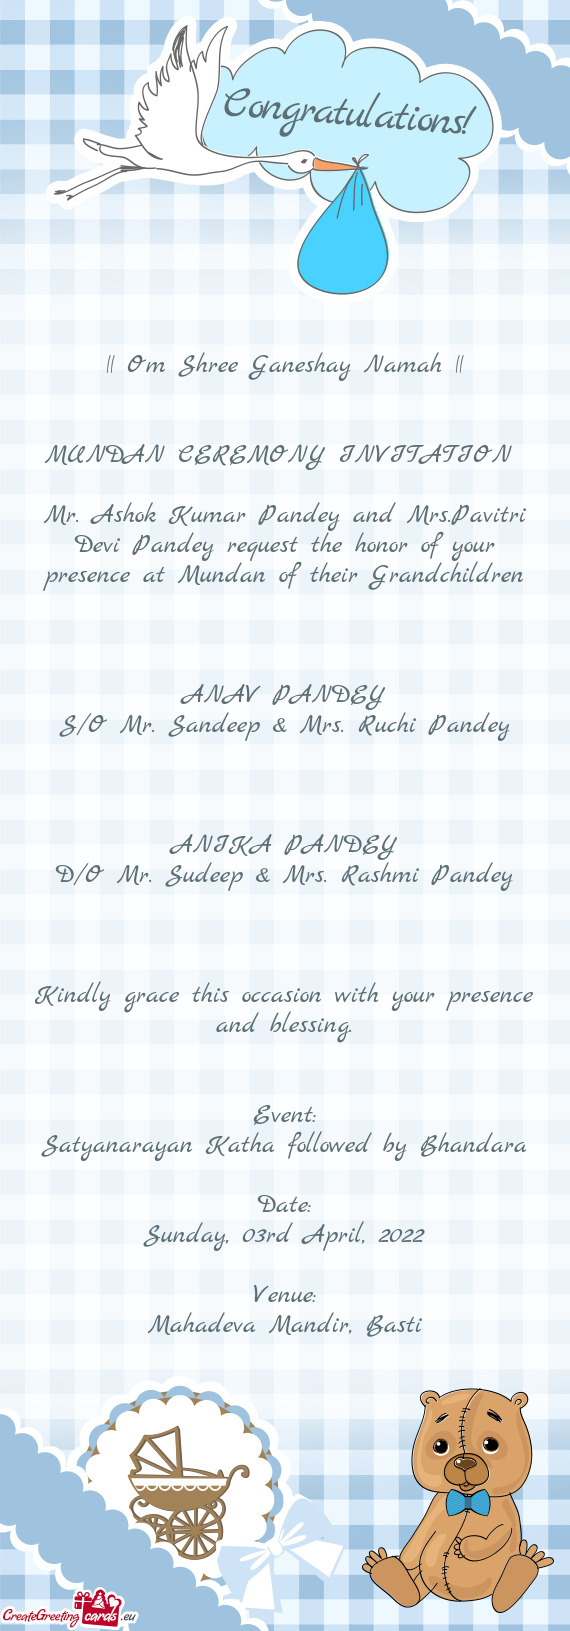 S/O Mr. Sandeep & Mrs. Ruchi Pandey